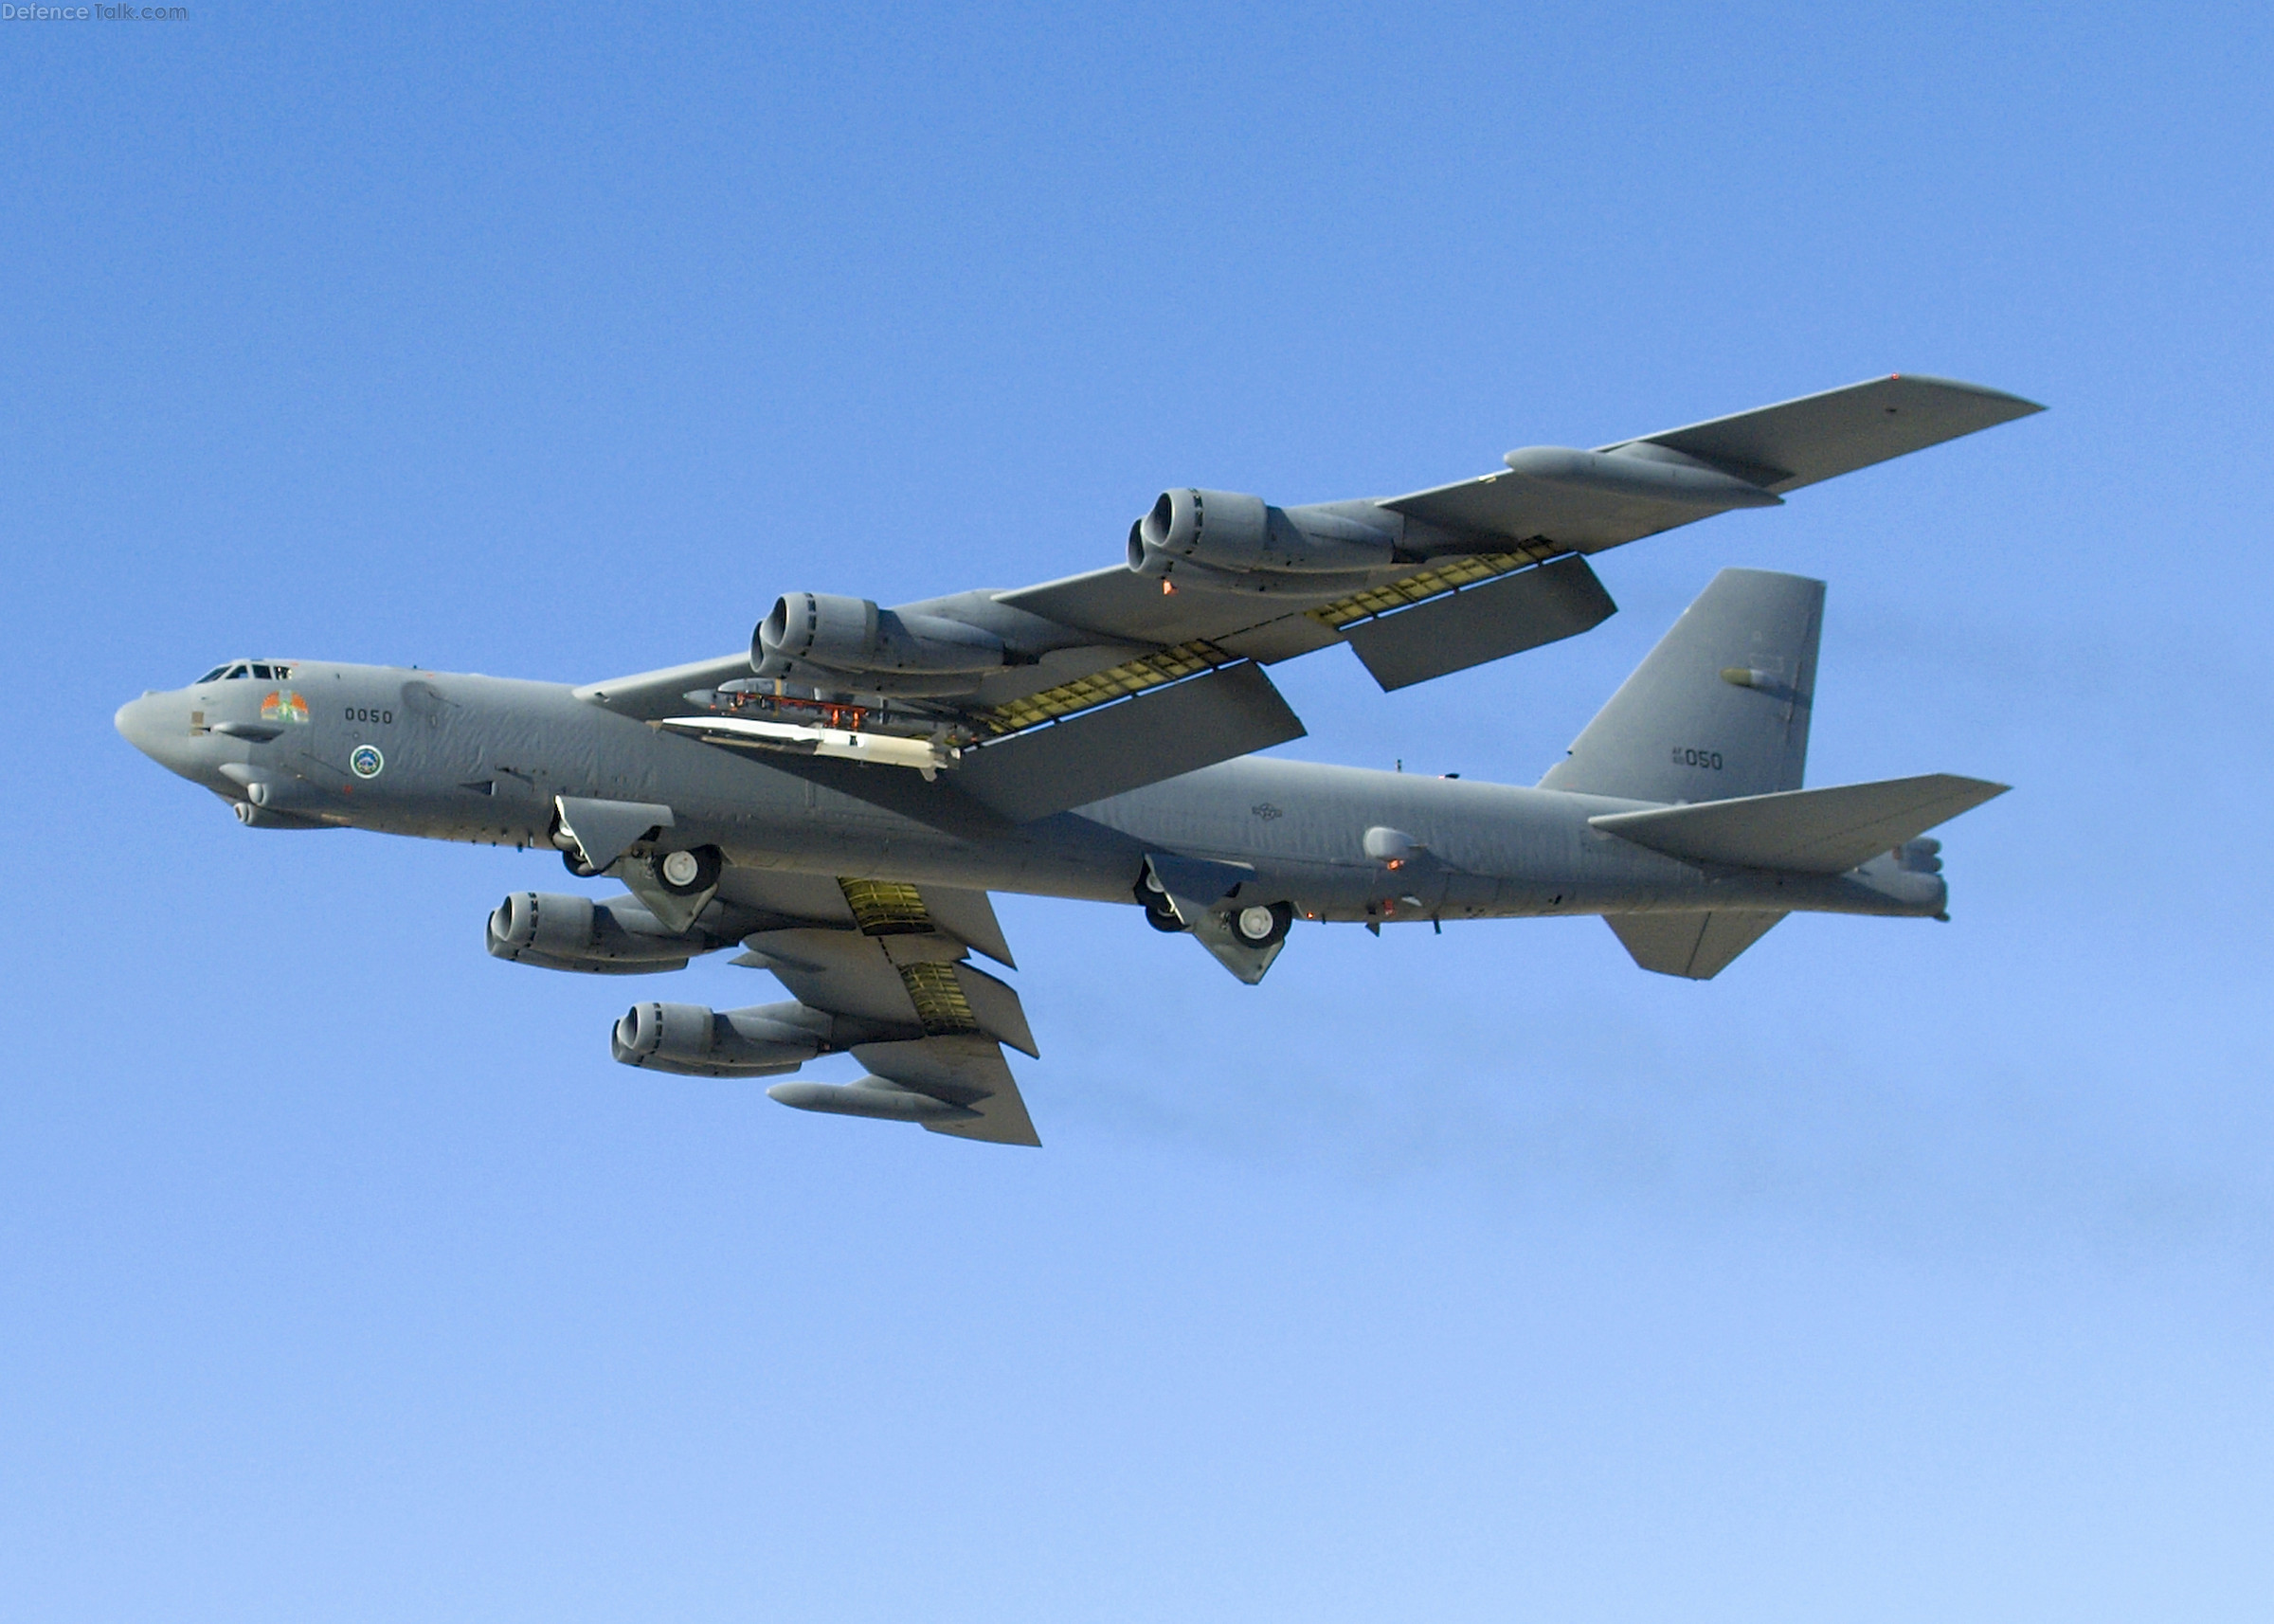 USAF  B-52 Stratofortress with X-51A scramjet